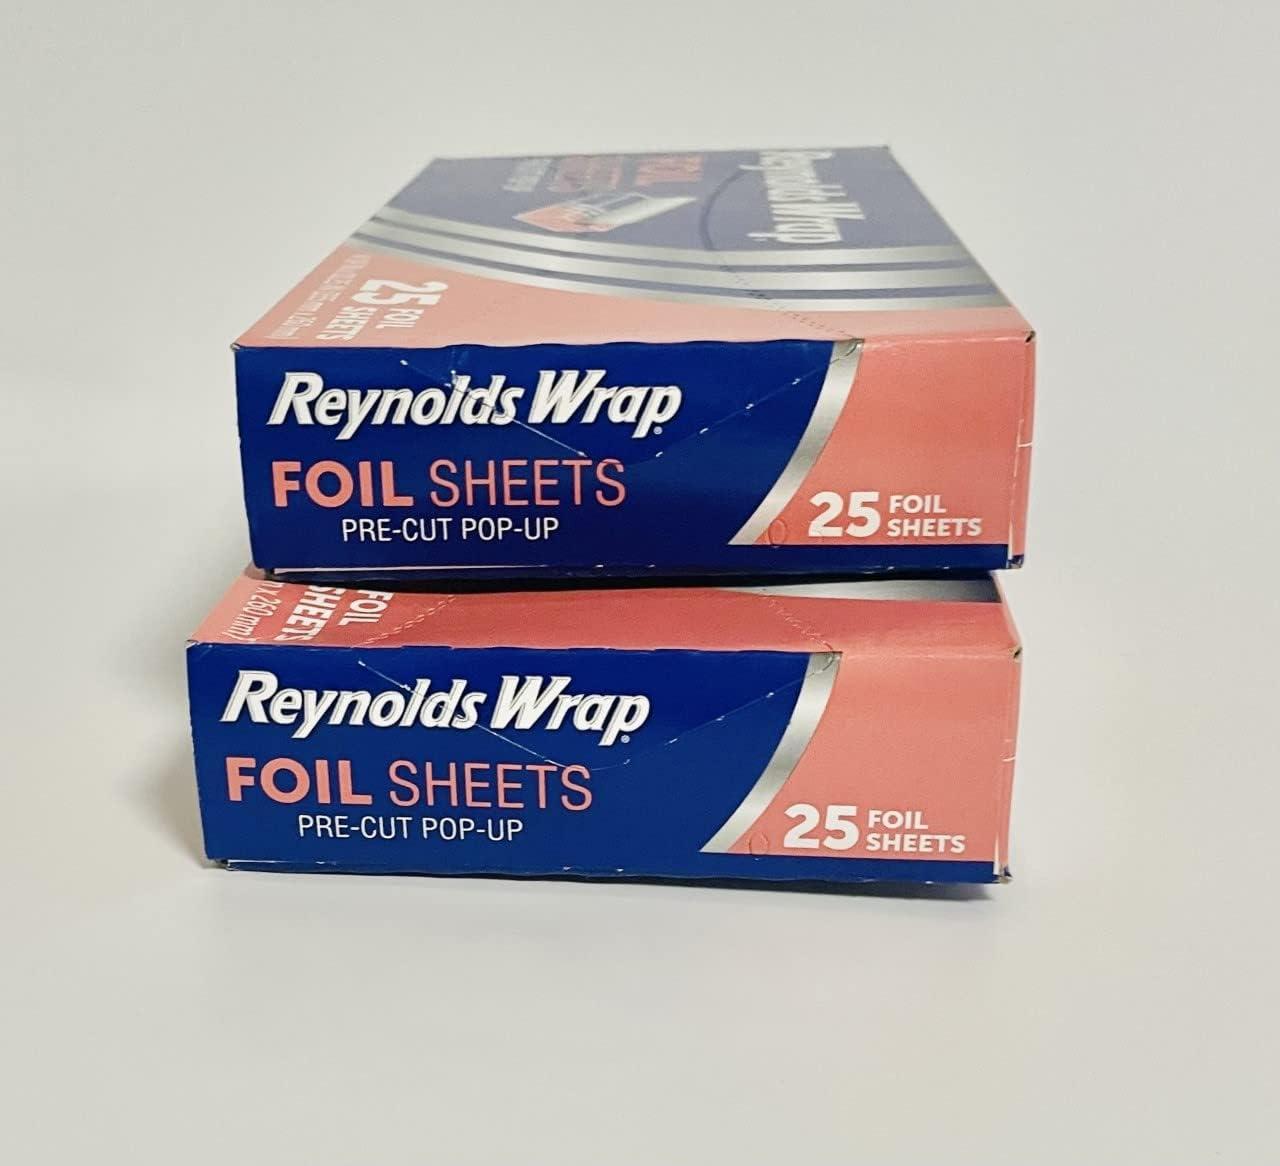 Reynolds Wrappers 25 Pre-Cut Pop Up Foil Sheets (4 Pack)